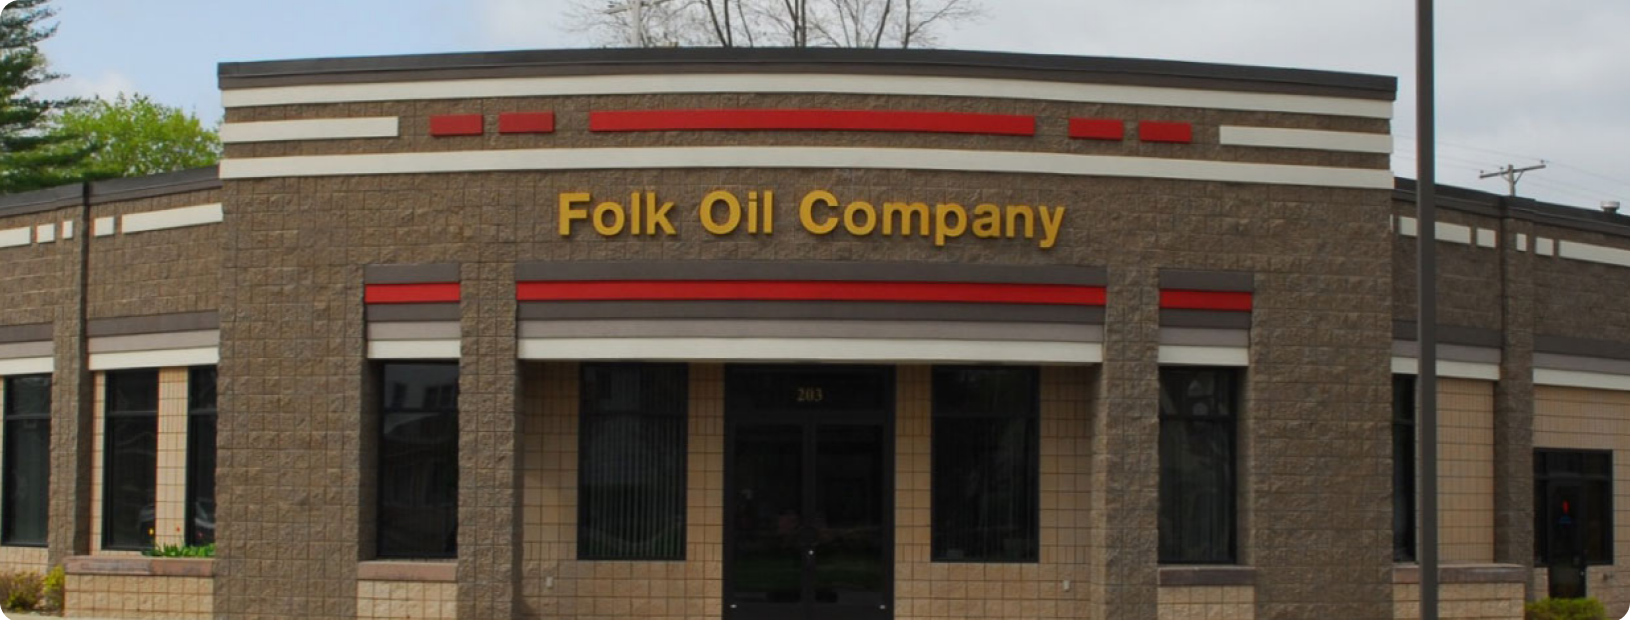 Folk Oil Company headquarters building